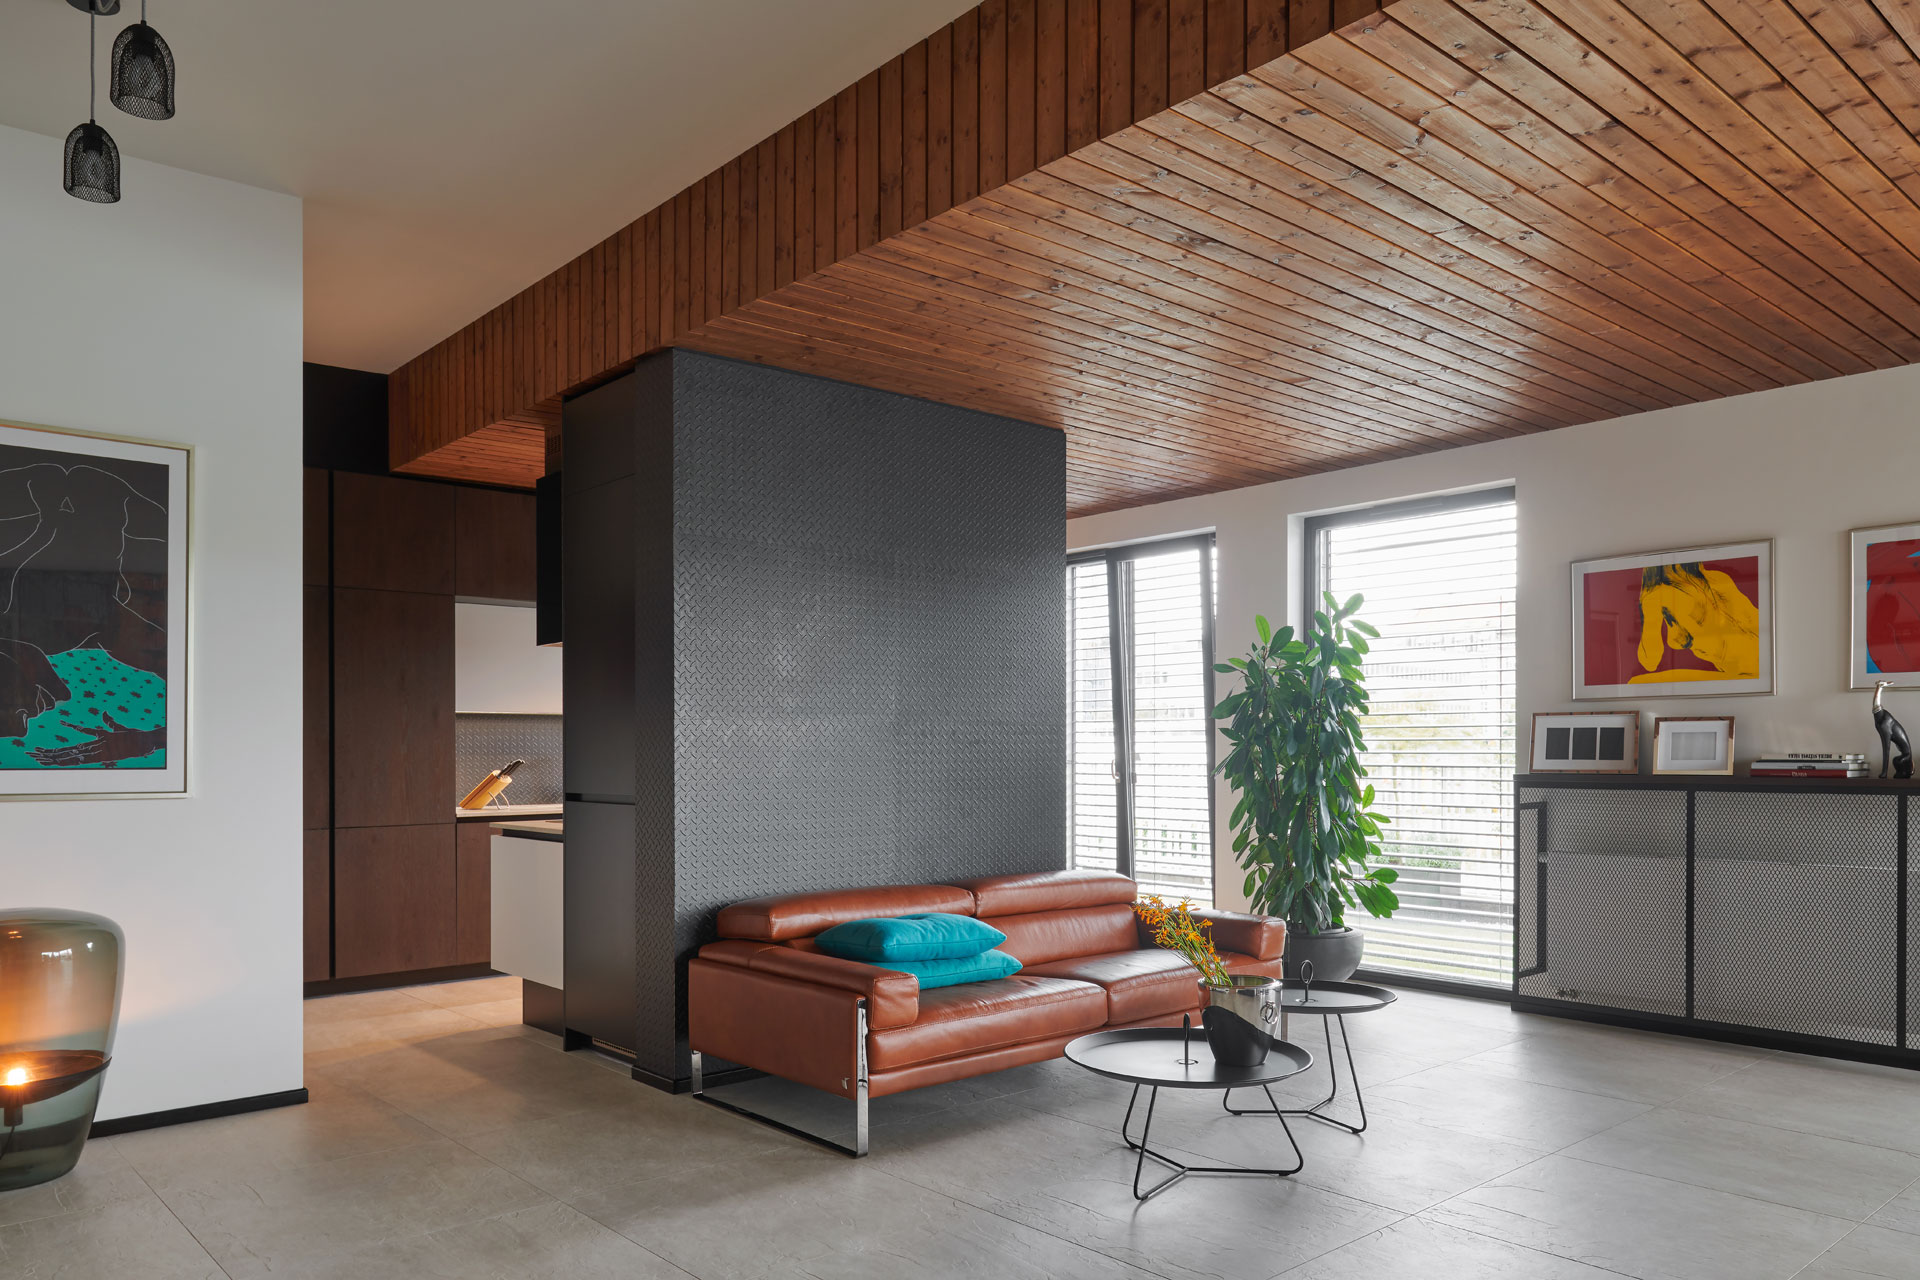 Hanák Furniture Realization of a customized interior